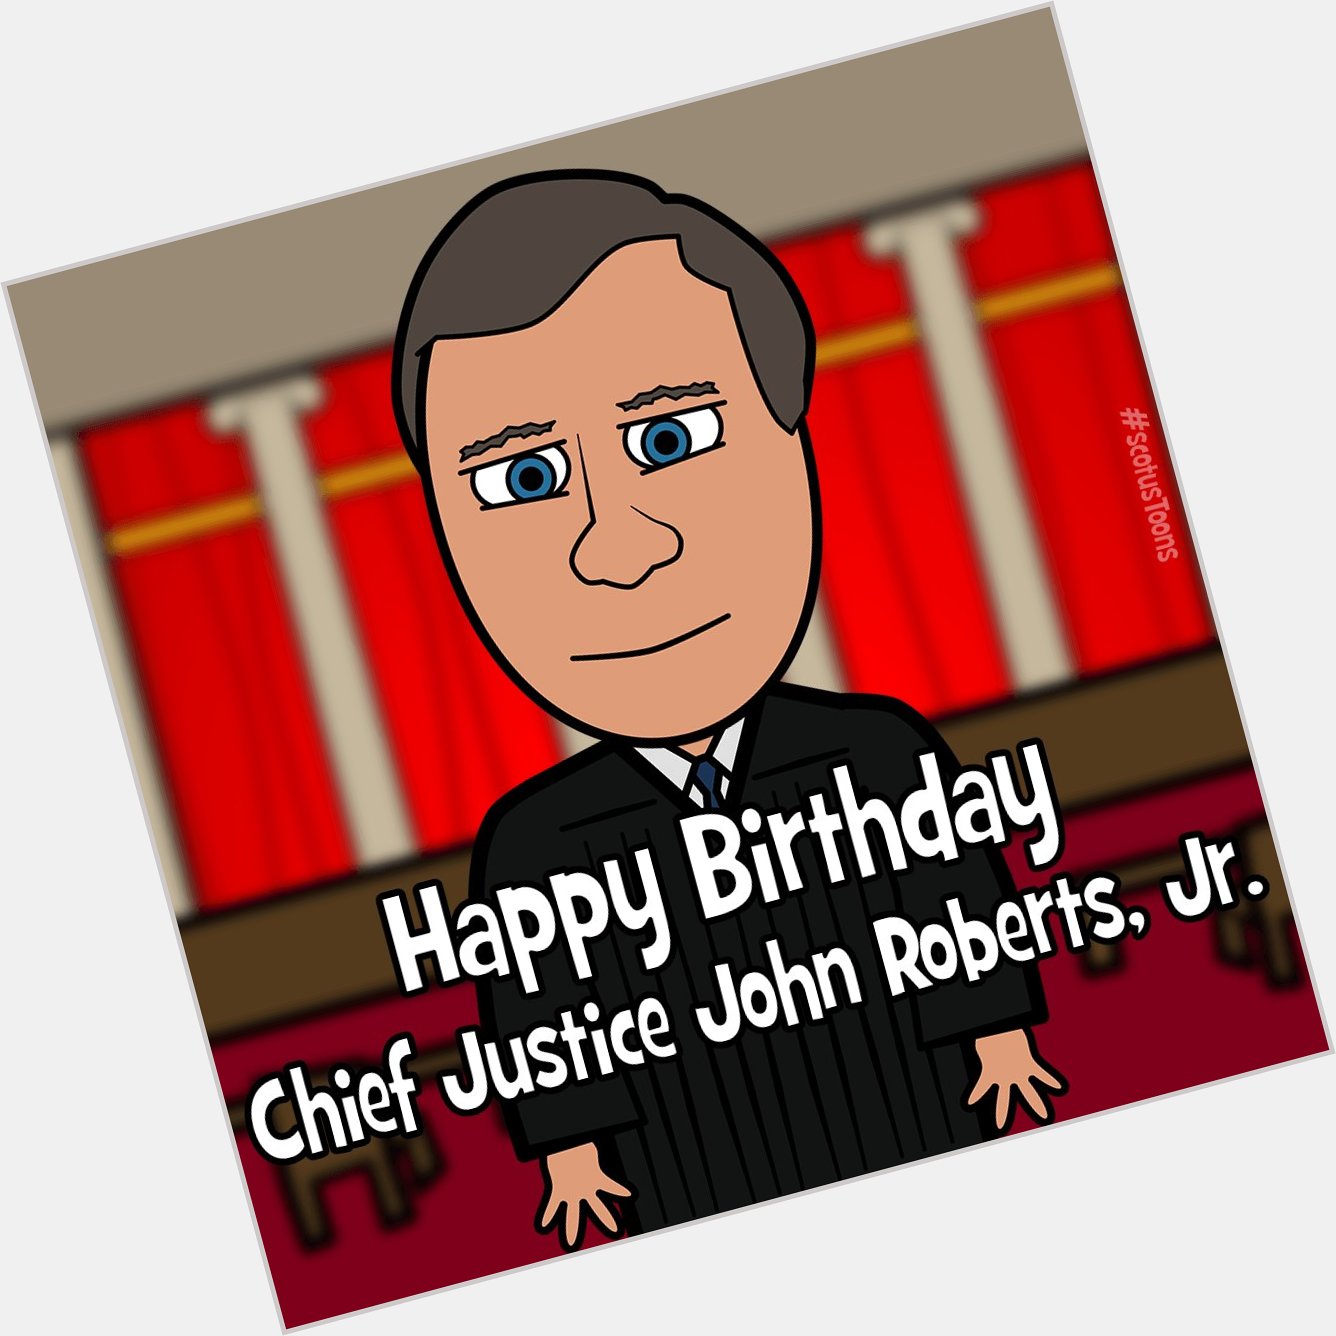 Happy Birthday Chief Justice John Roberts Jr.!    